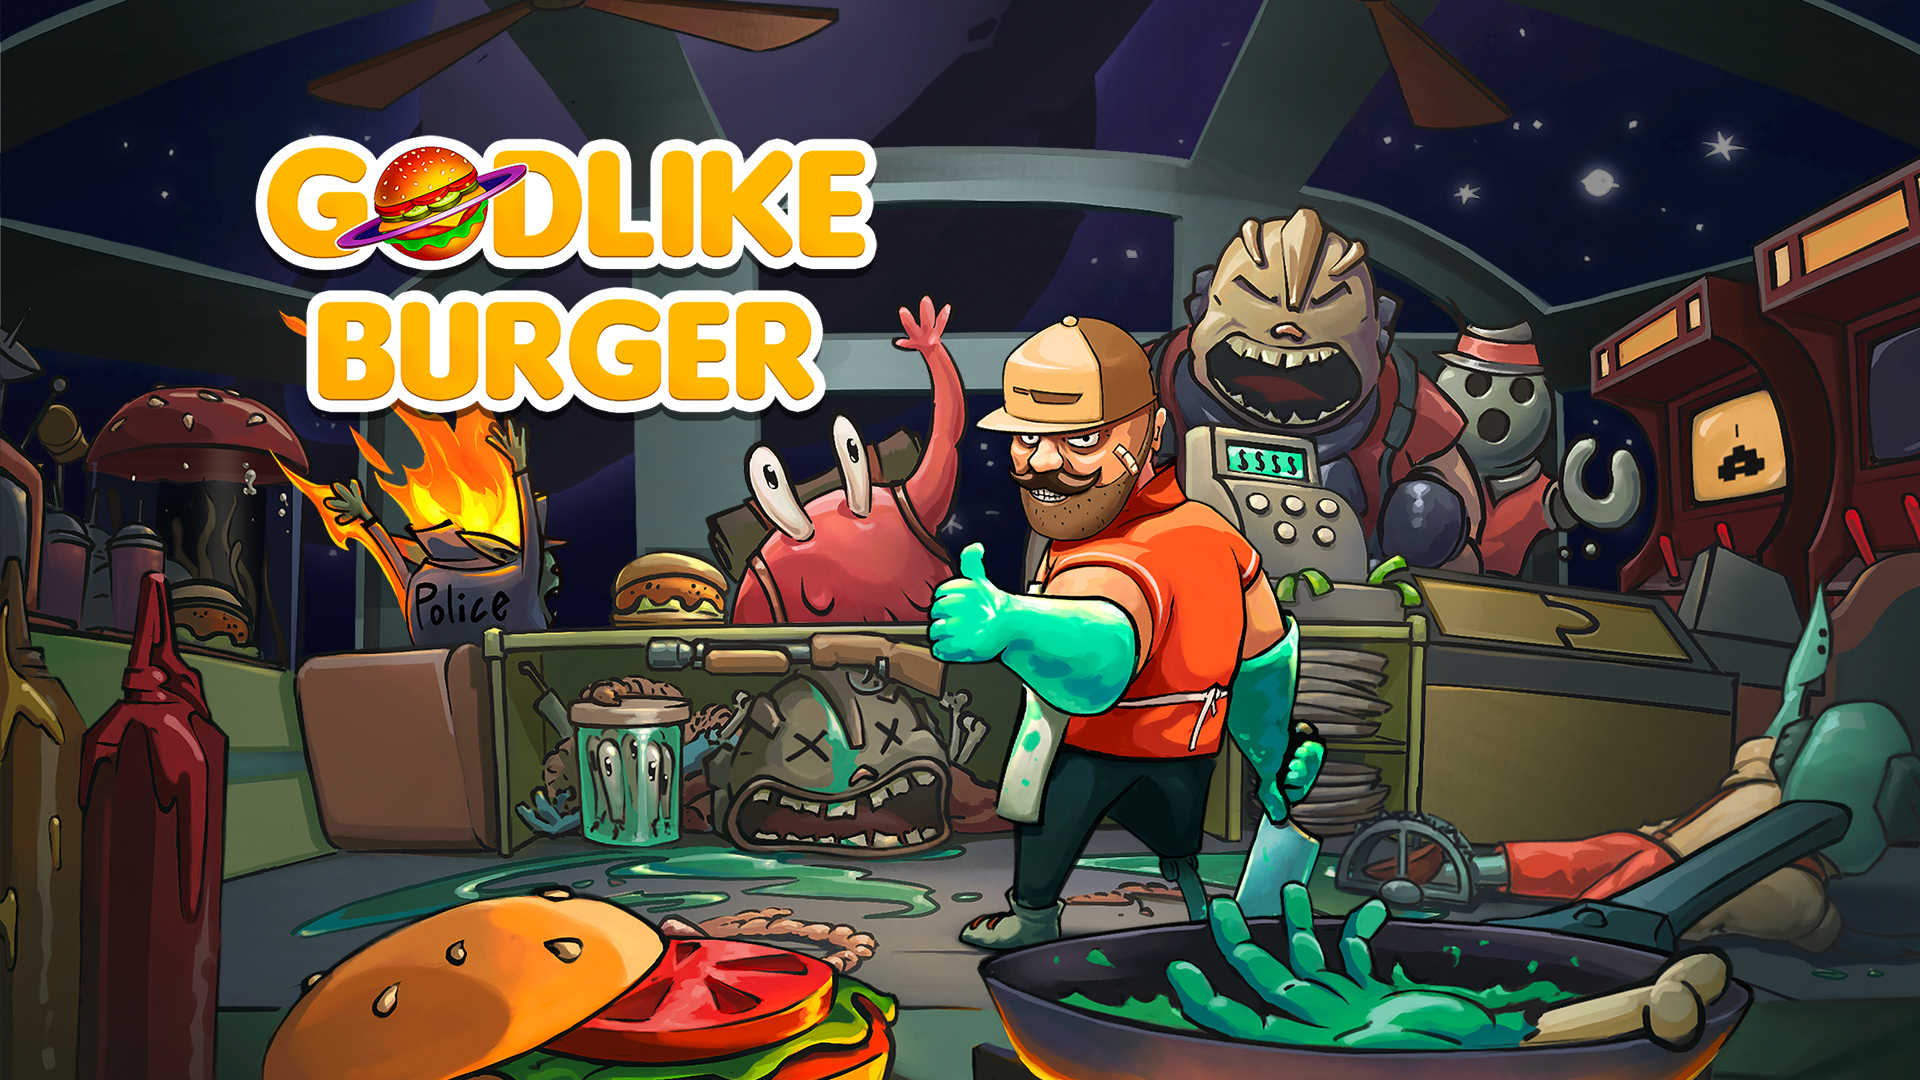 Godlike Burgerのタイトル画像